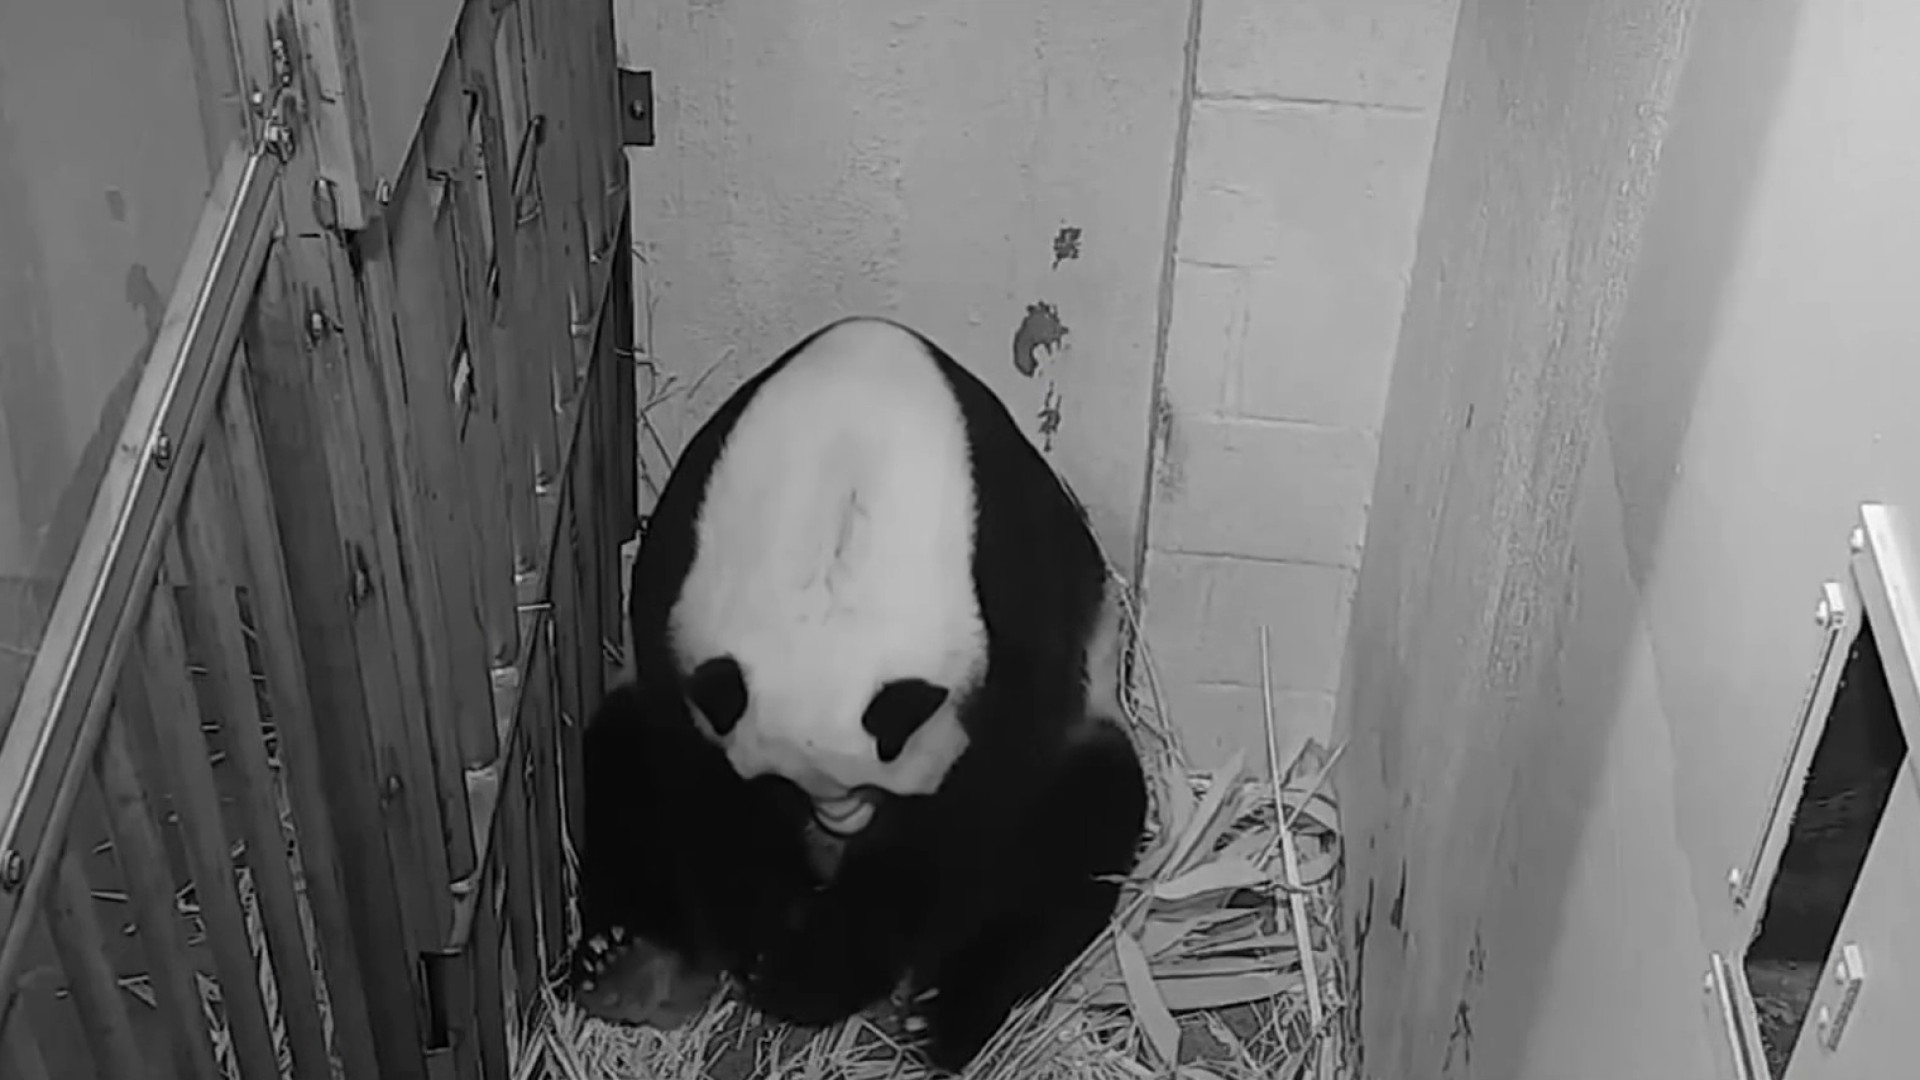 ‘The Whole World Celebrates' On-Camera Birth of Panda Cub